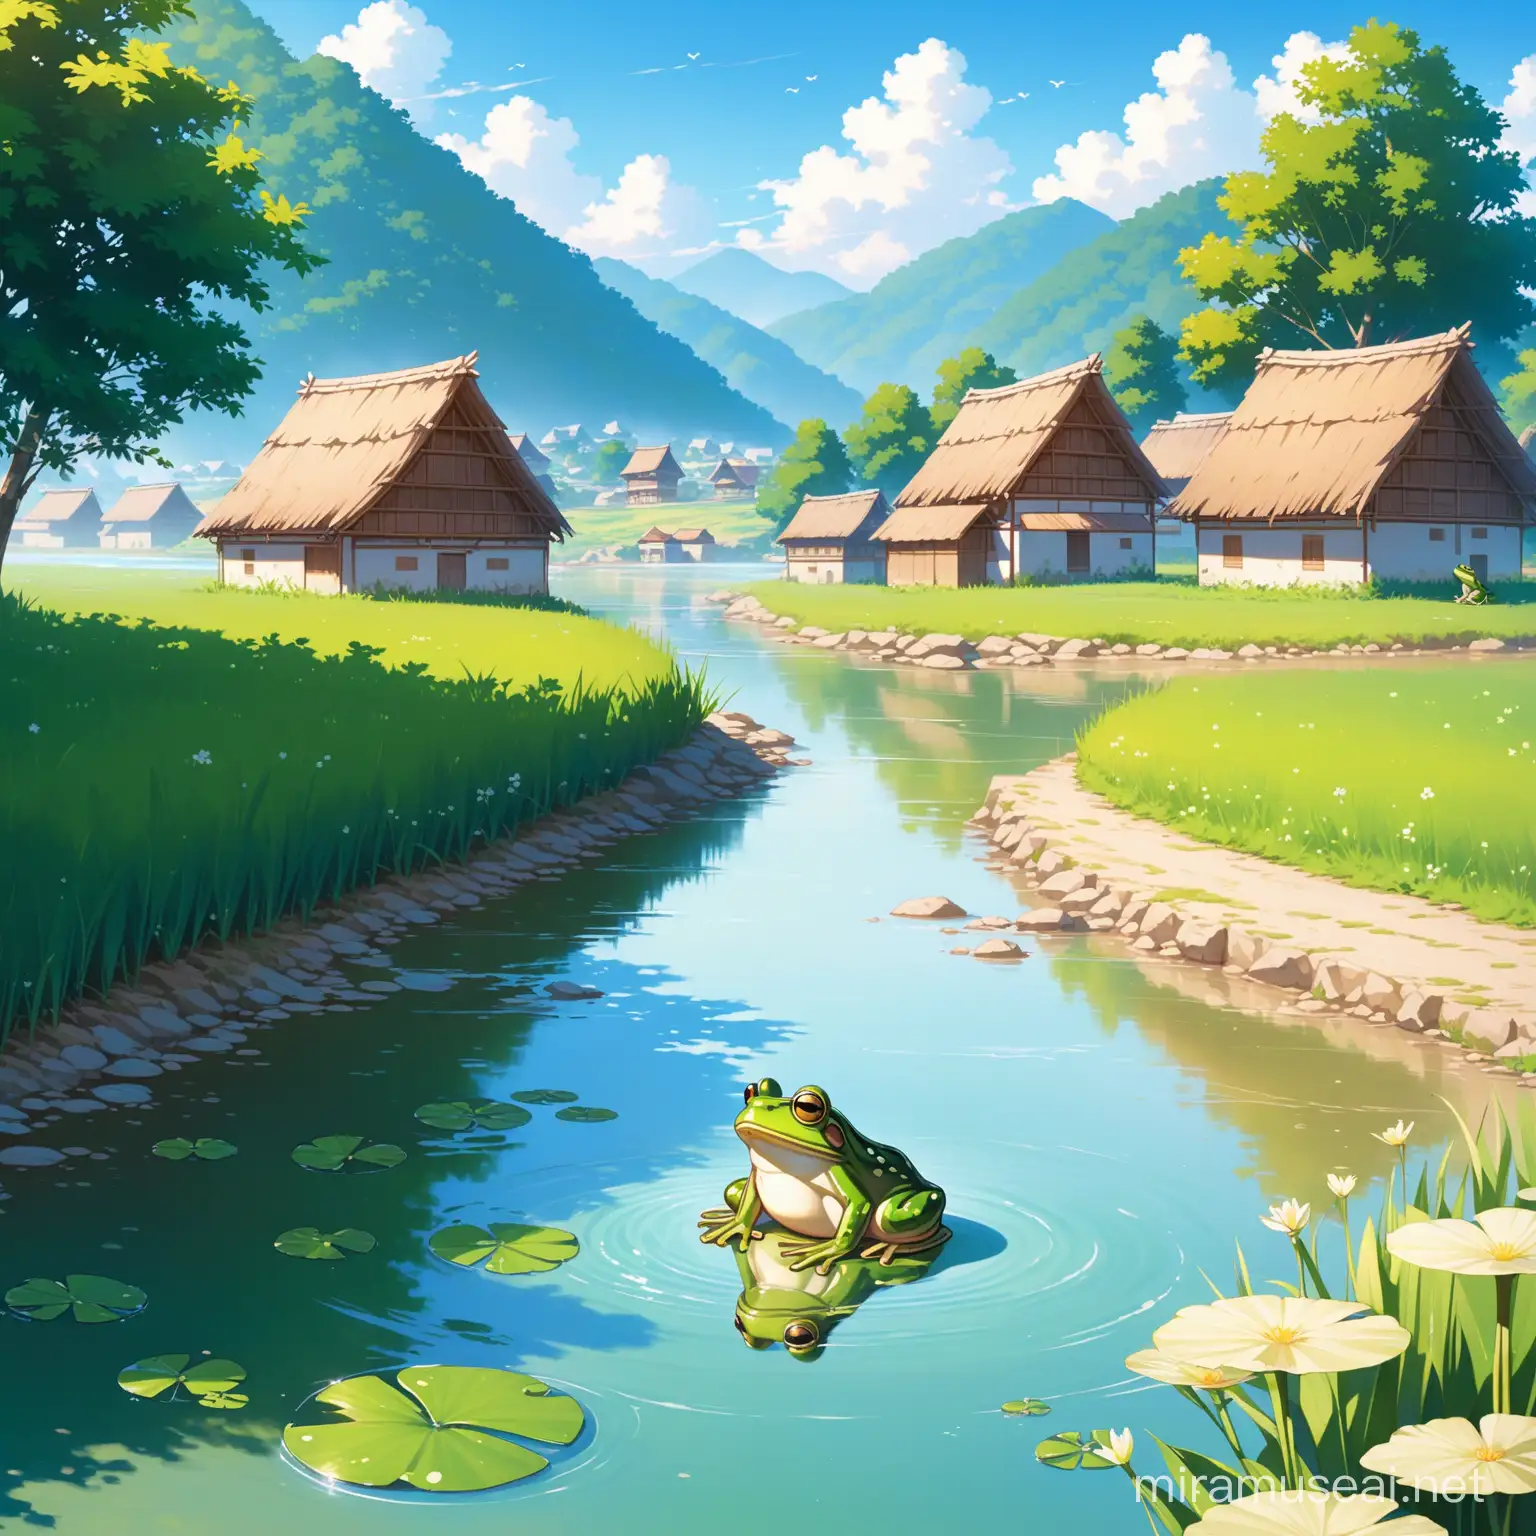 Tranquil Frog by Riverside Village under Sunlight